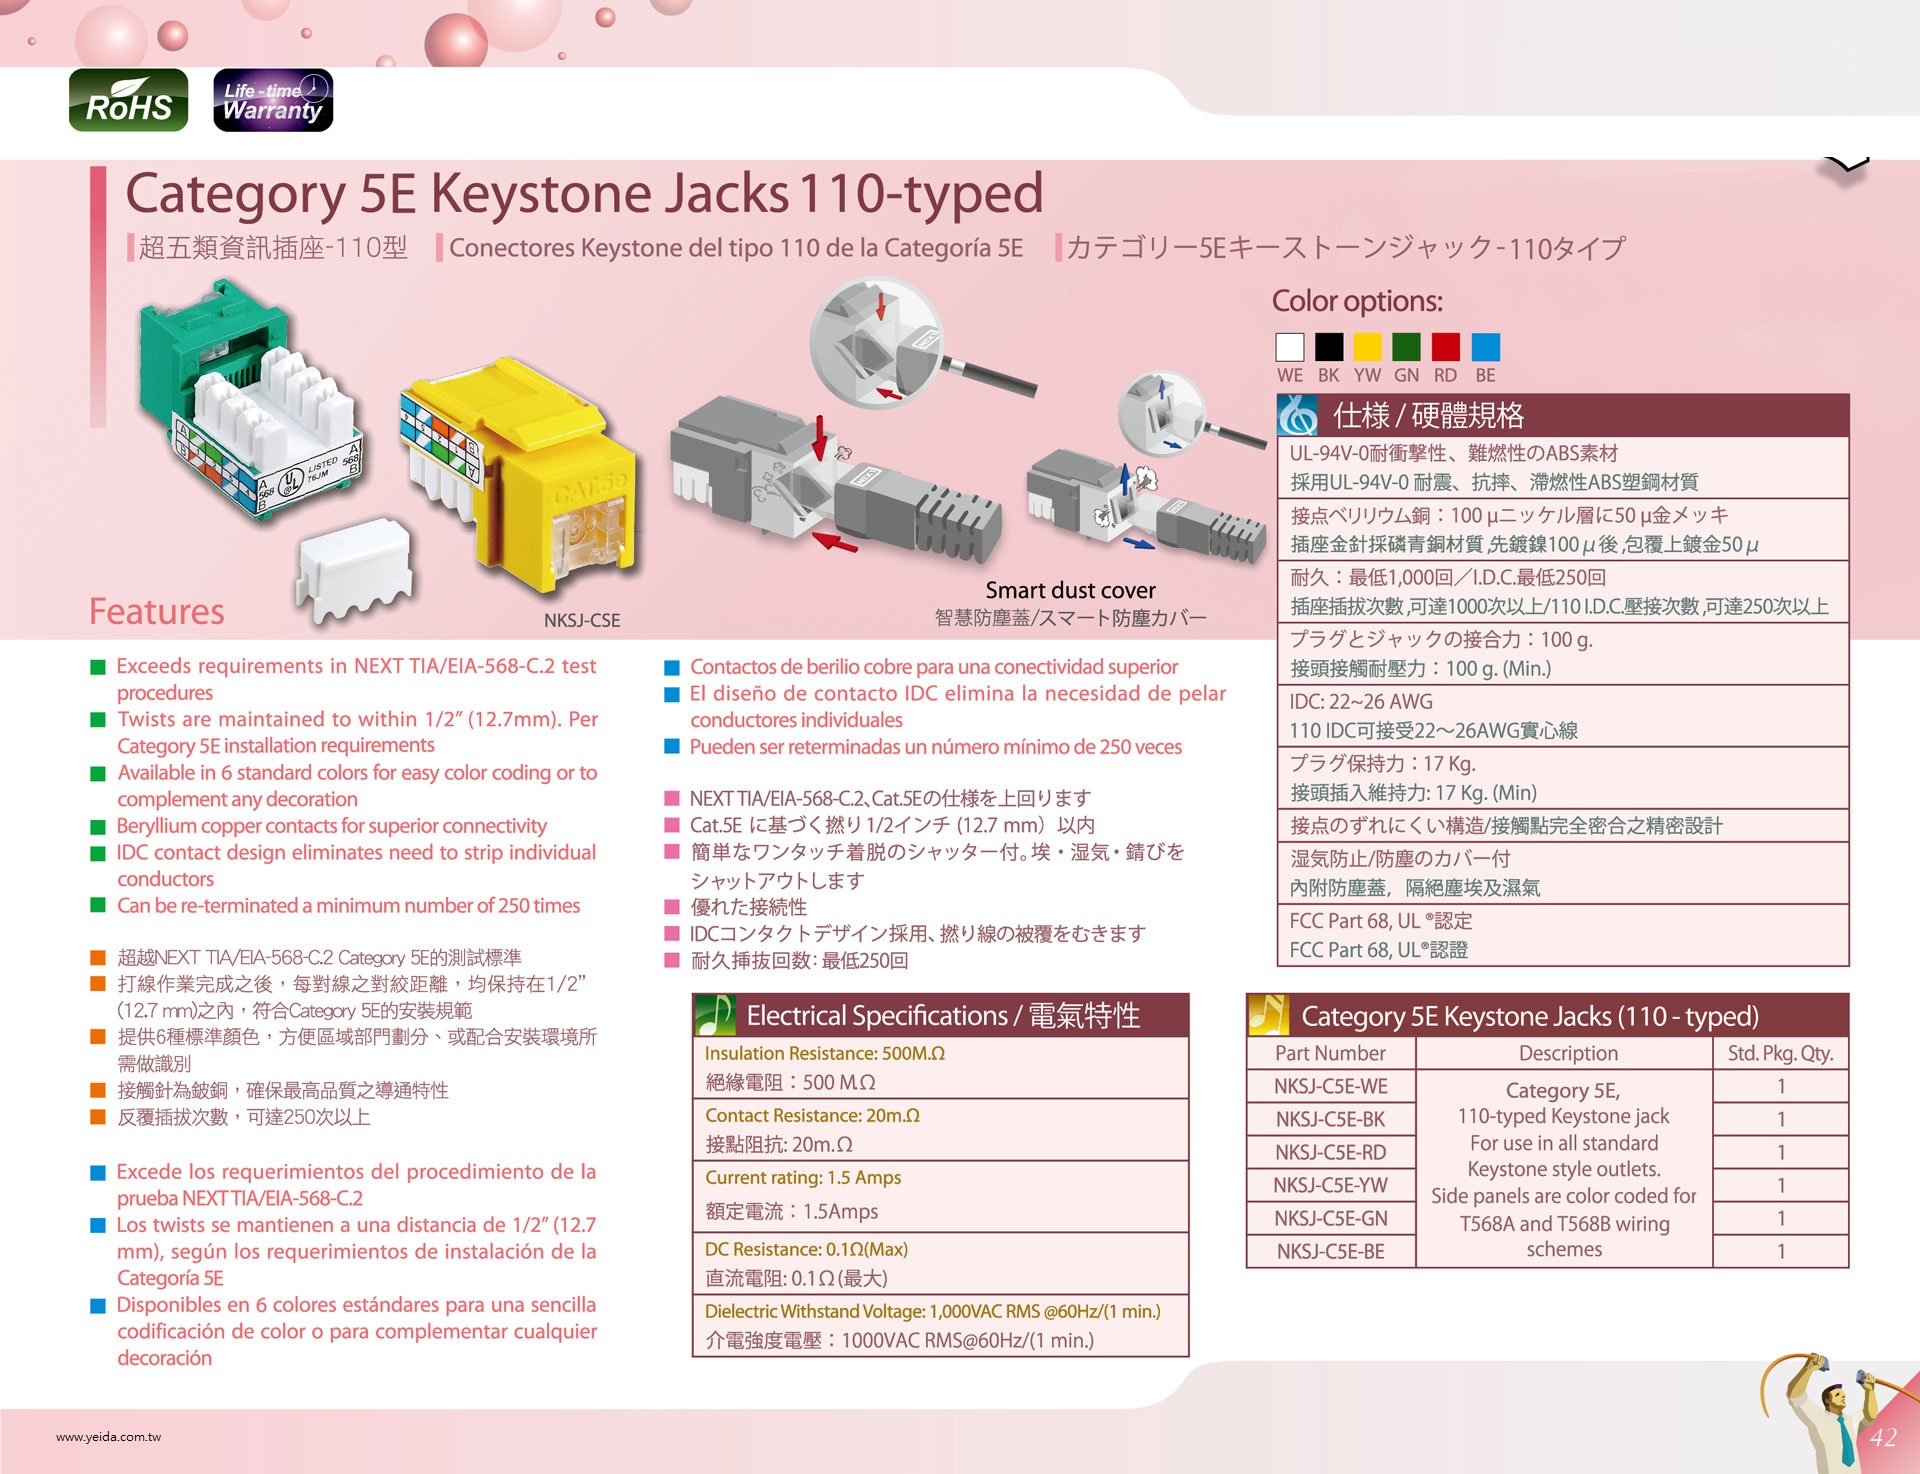 NEX-1 UTP-CAT5e 資訊插座 Category 5E Keystone Jacks (110-typed)產品圖